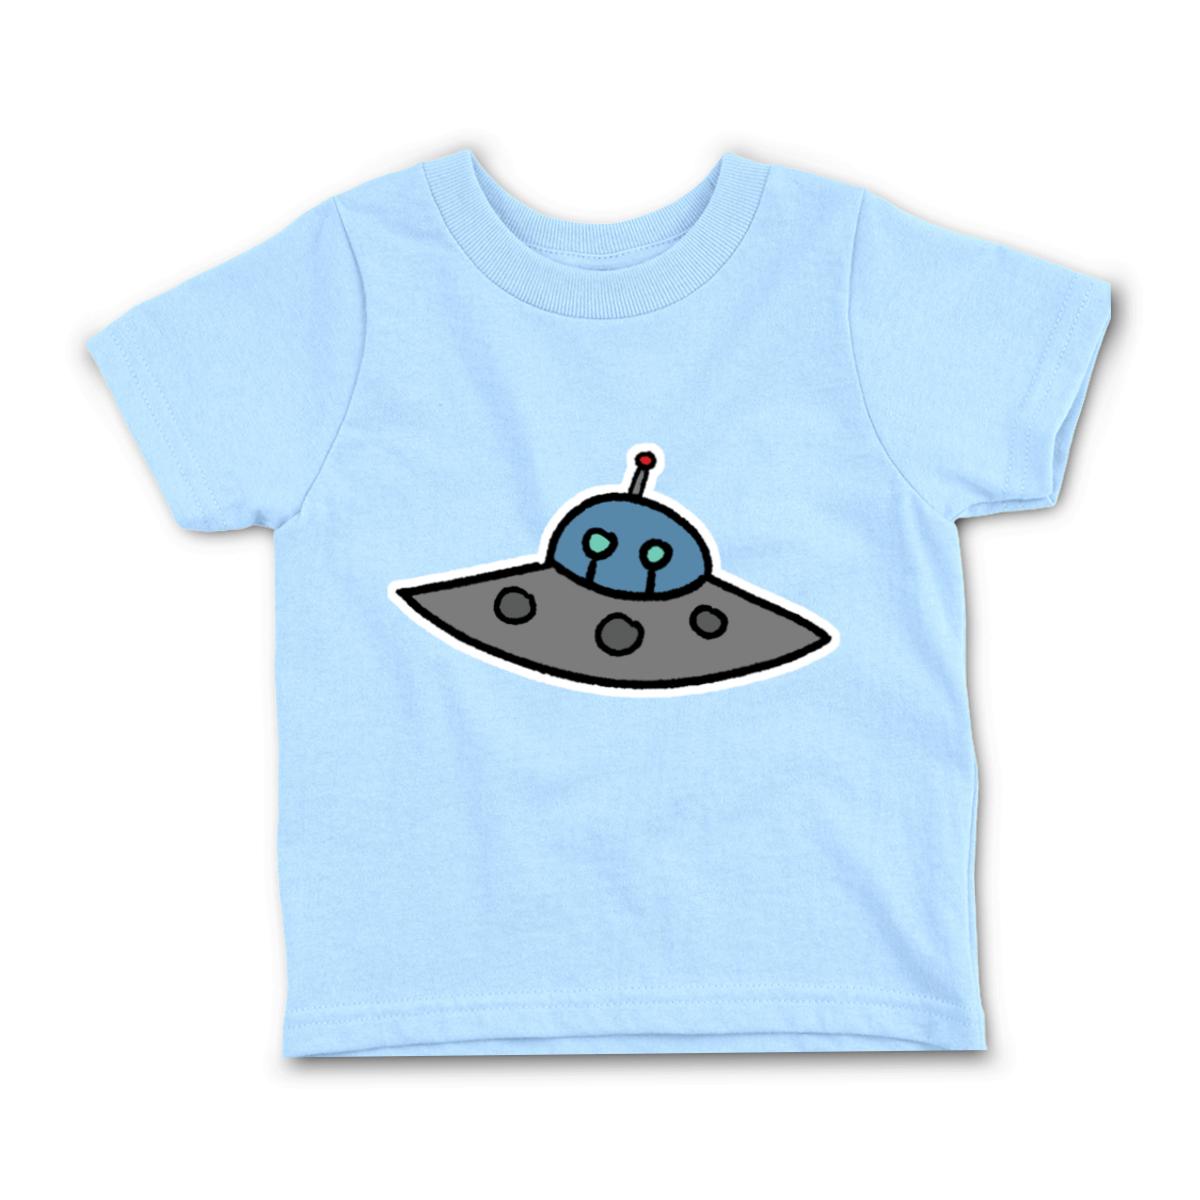 Flying Saucer Toddler Tee 4T light-blue